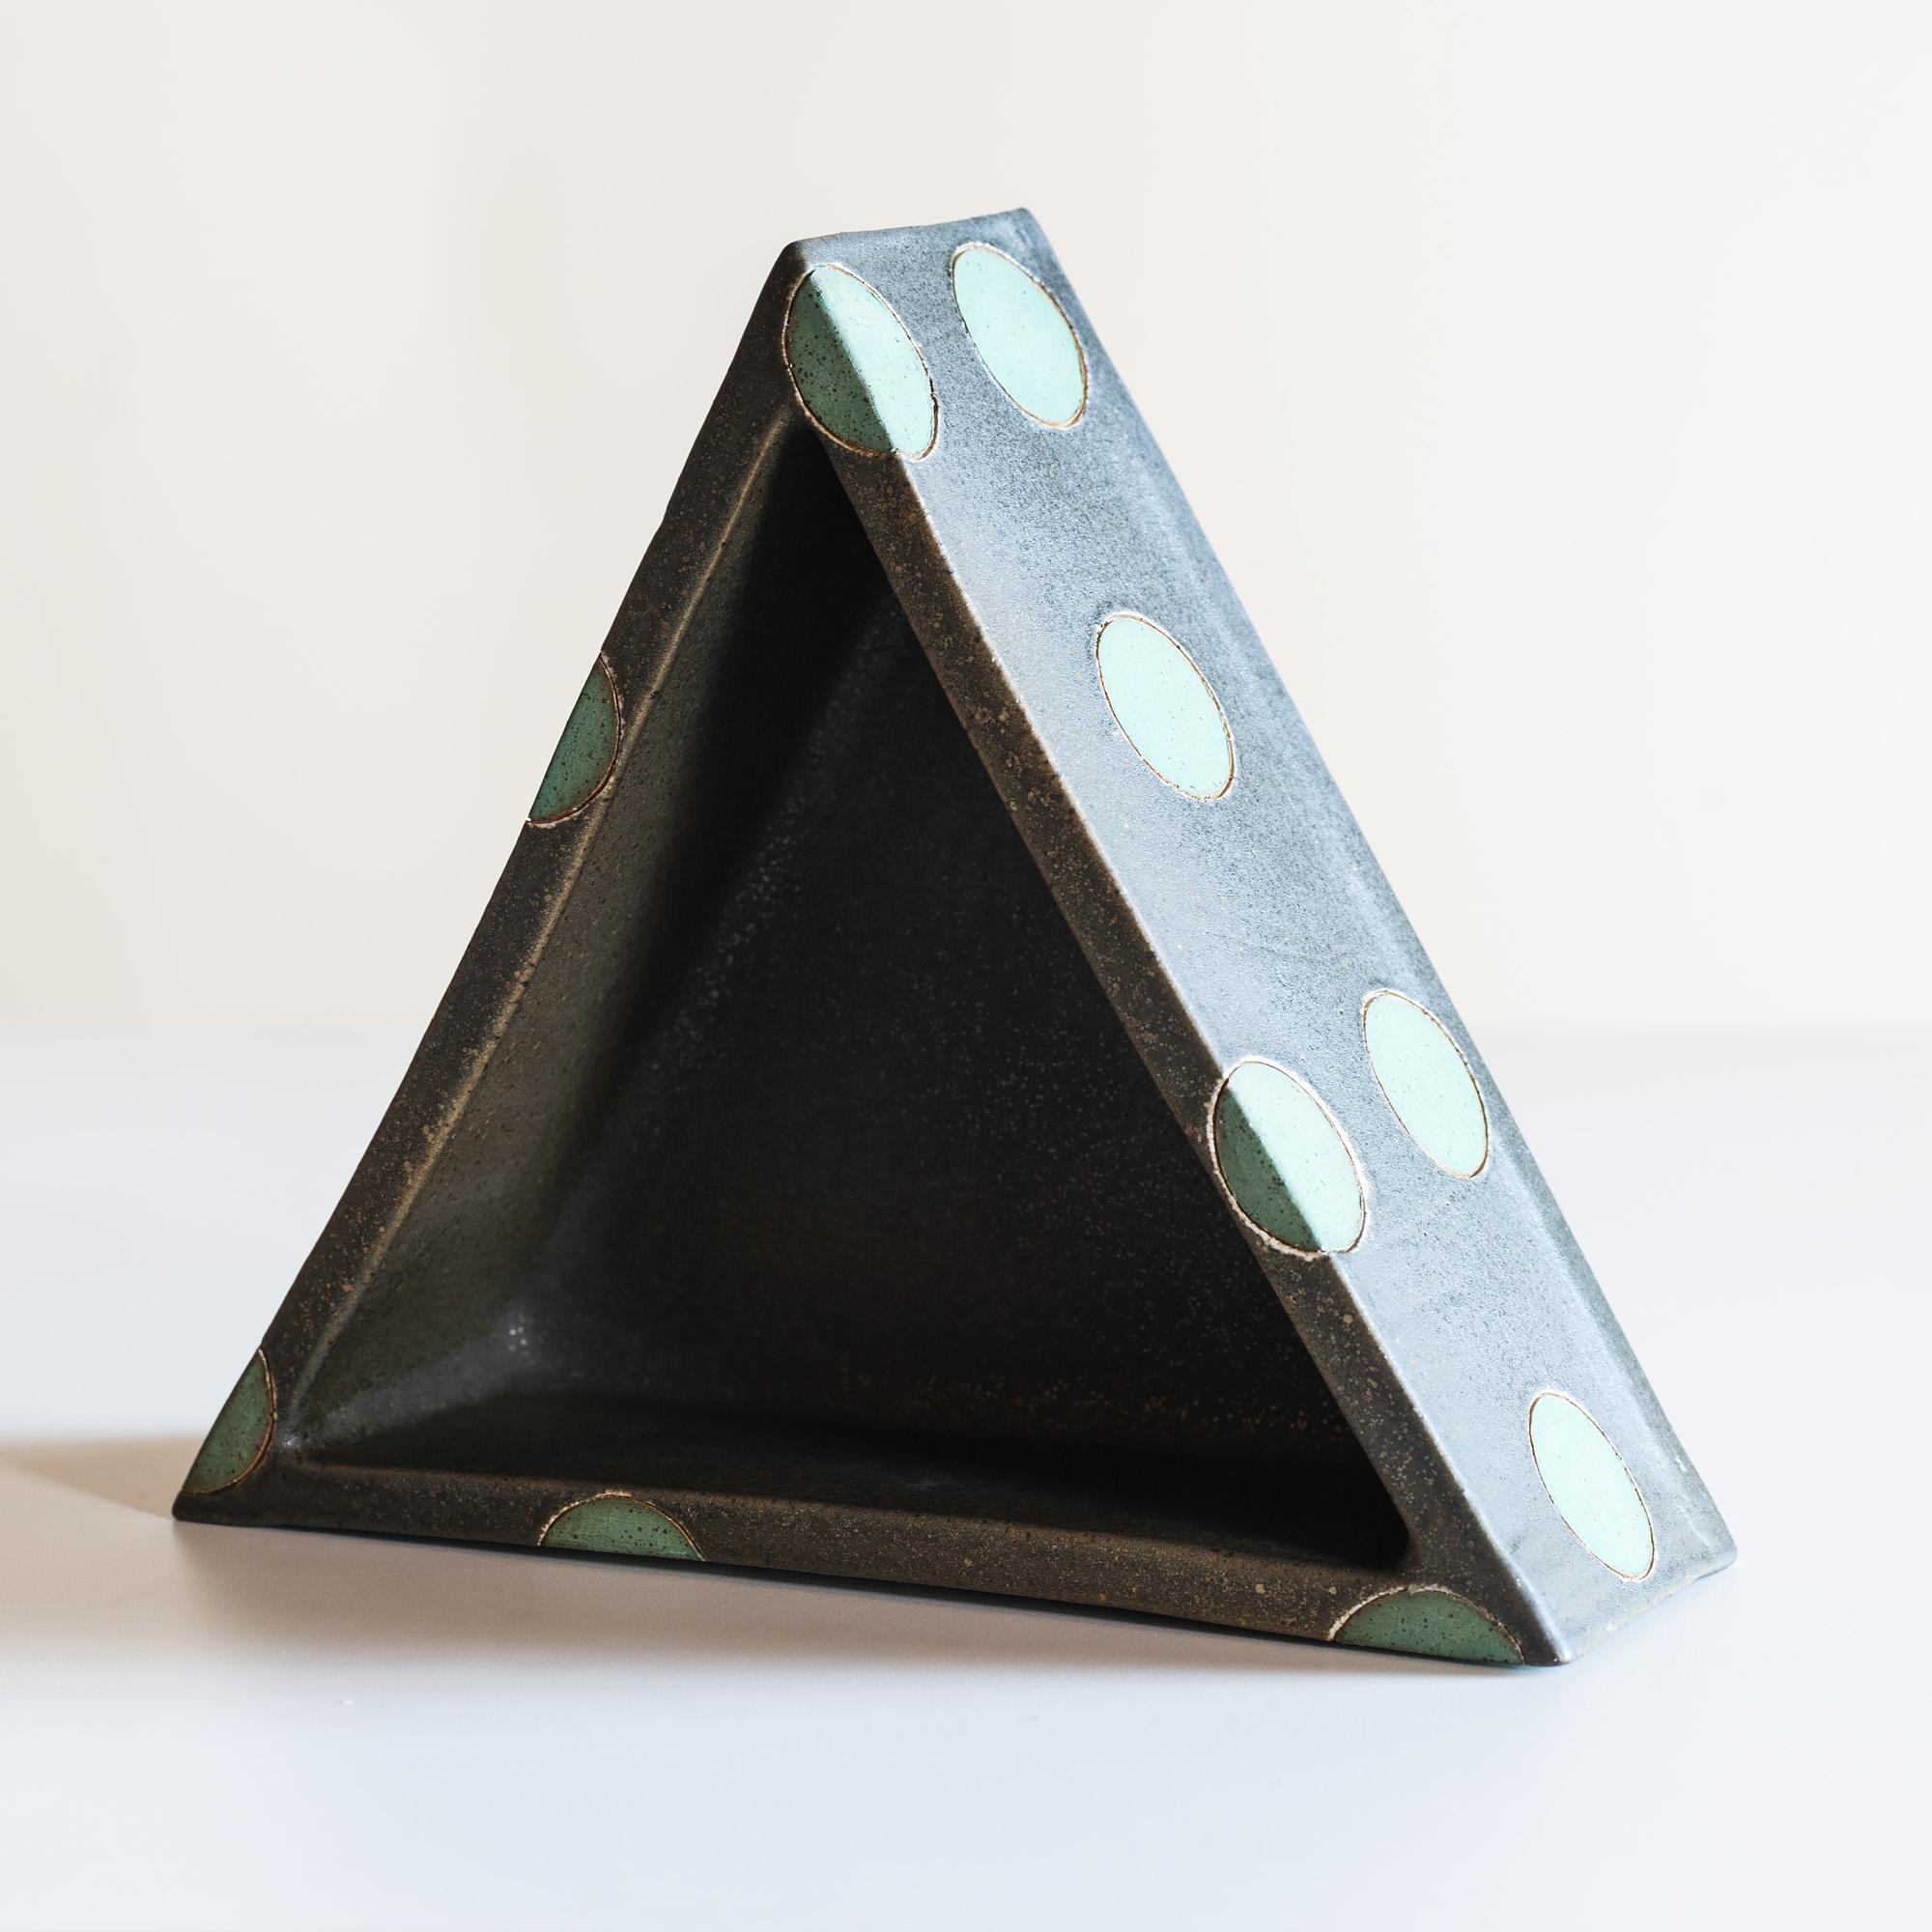 Contemporary Elemental Triangular Polka Dot Vessel by Matthew Ward, New Mexico, 2019